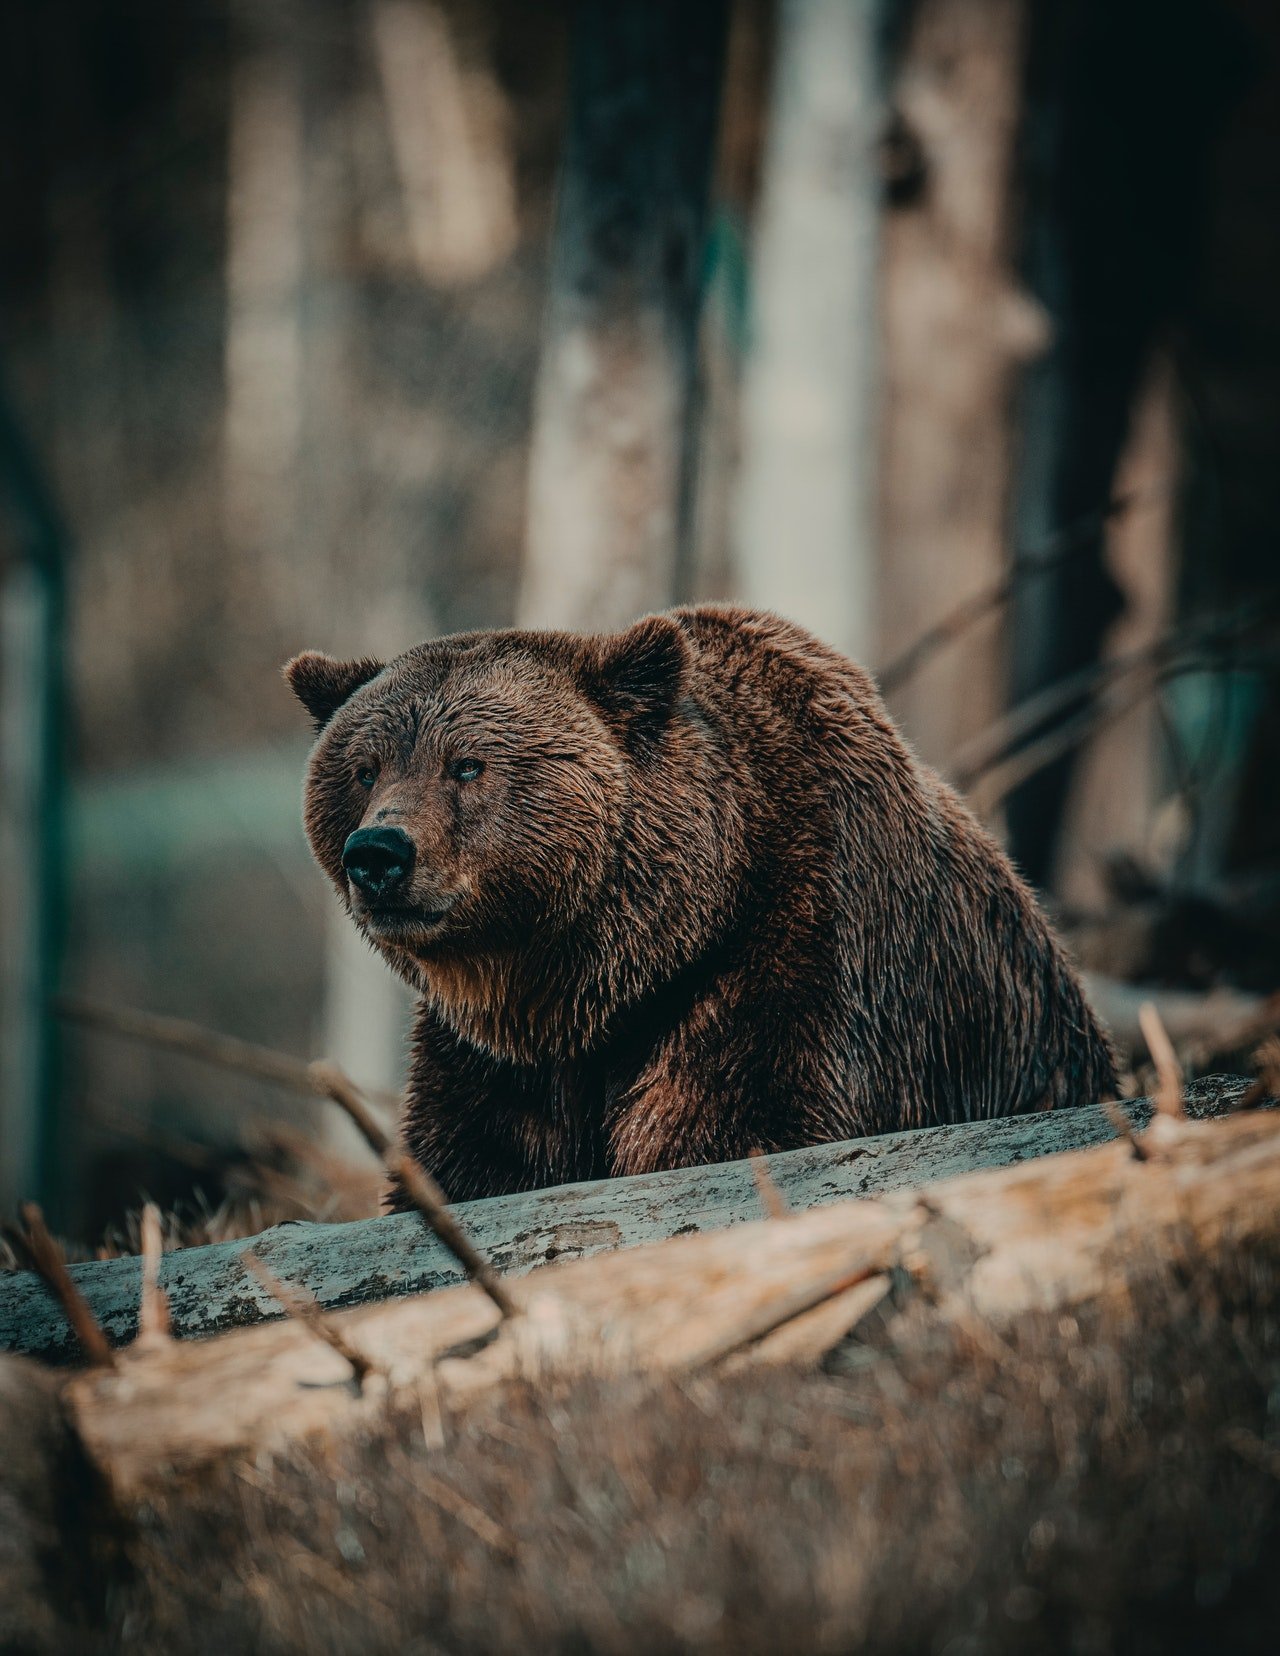 Bear in the woods| Photo: by Janko Ferlic from Pexels